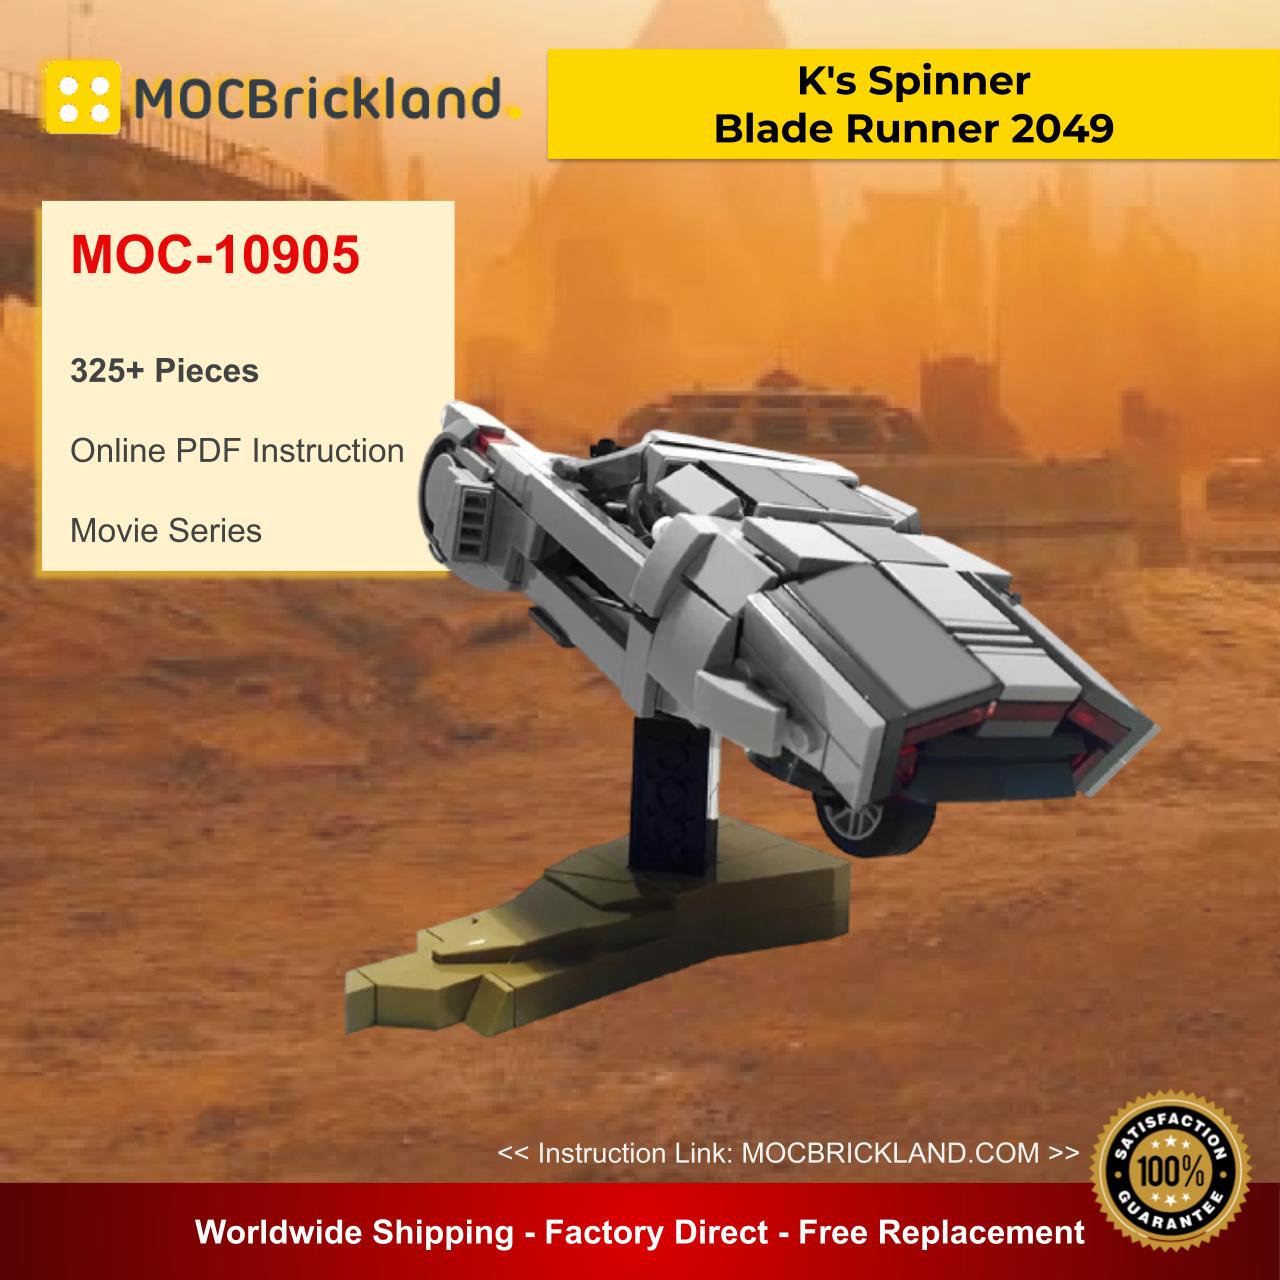 K's Spinner From Blade Runner 2049 MOC 10905 Movie Designed By BricksFeeder With 325 Pieces